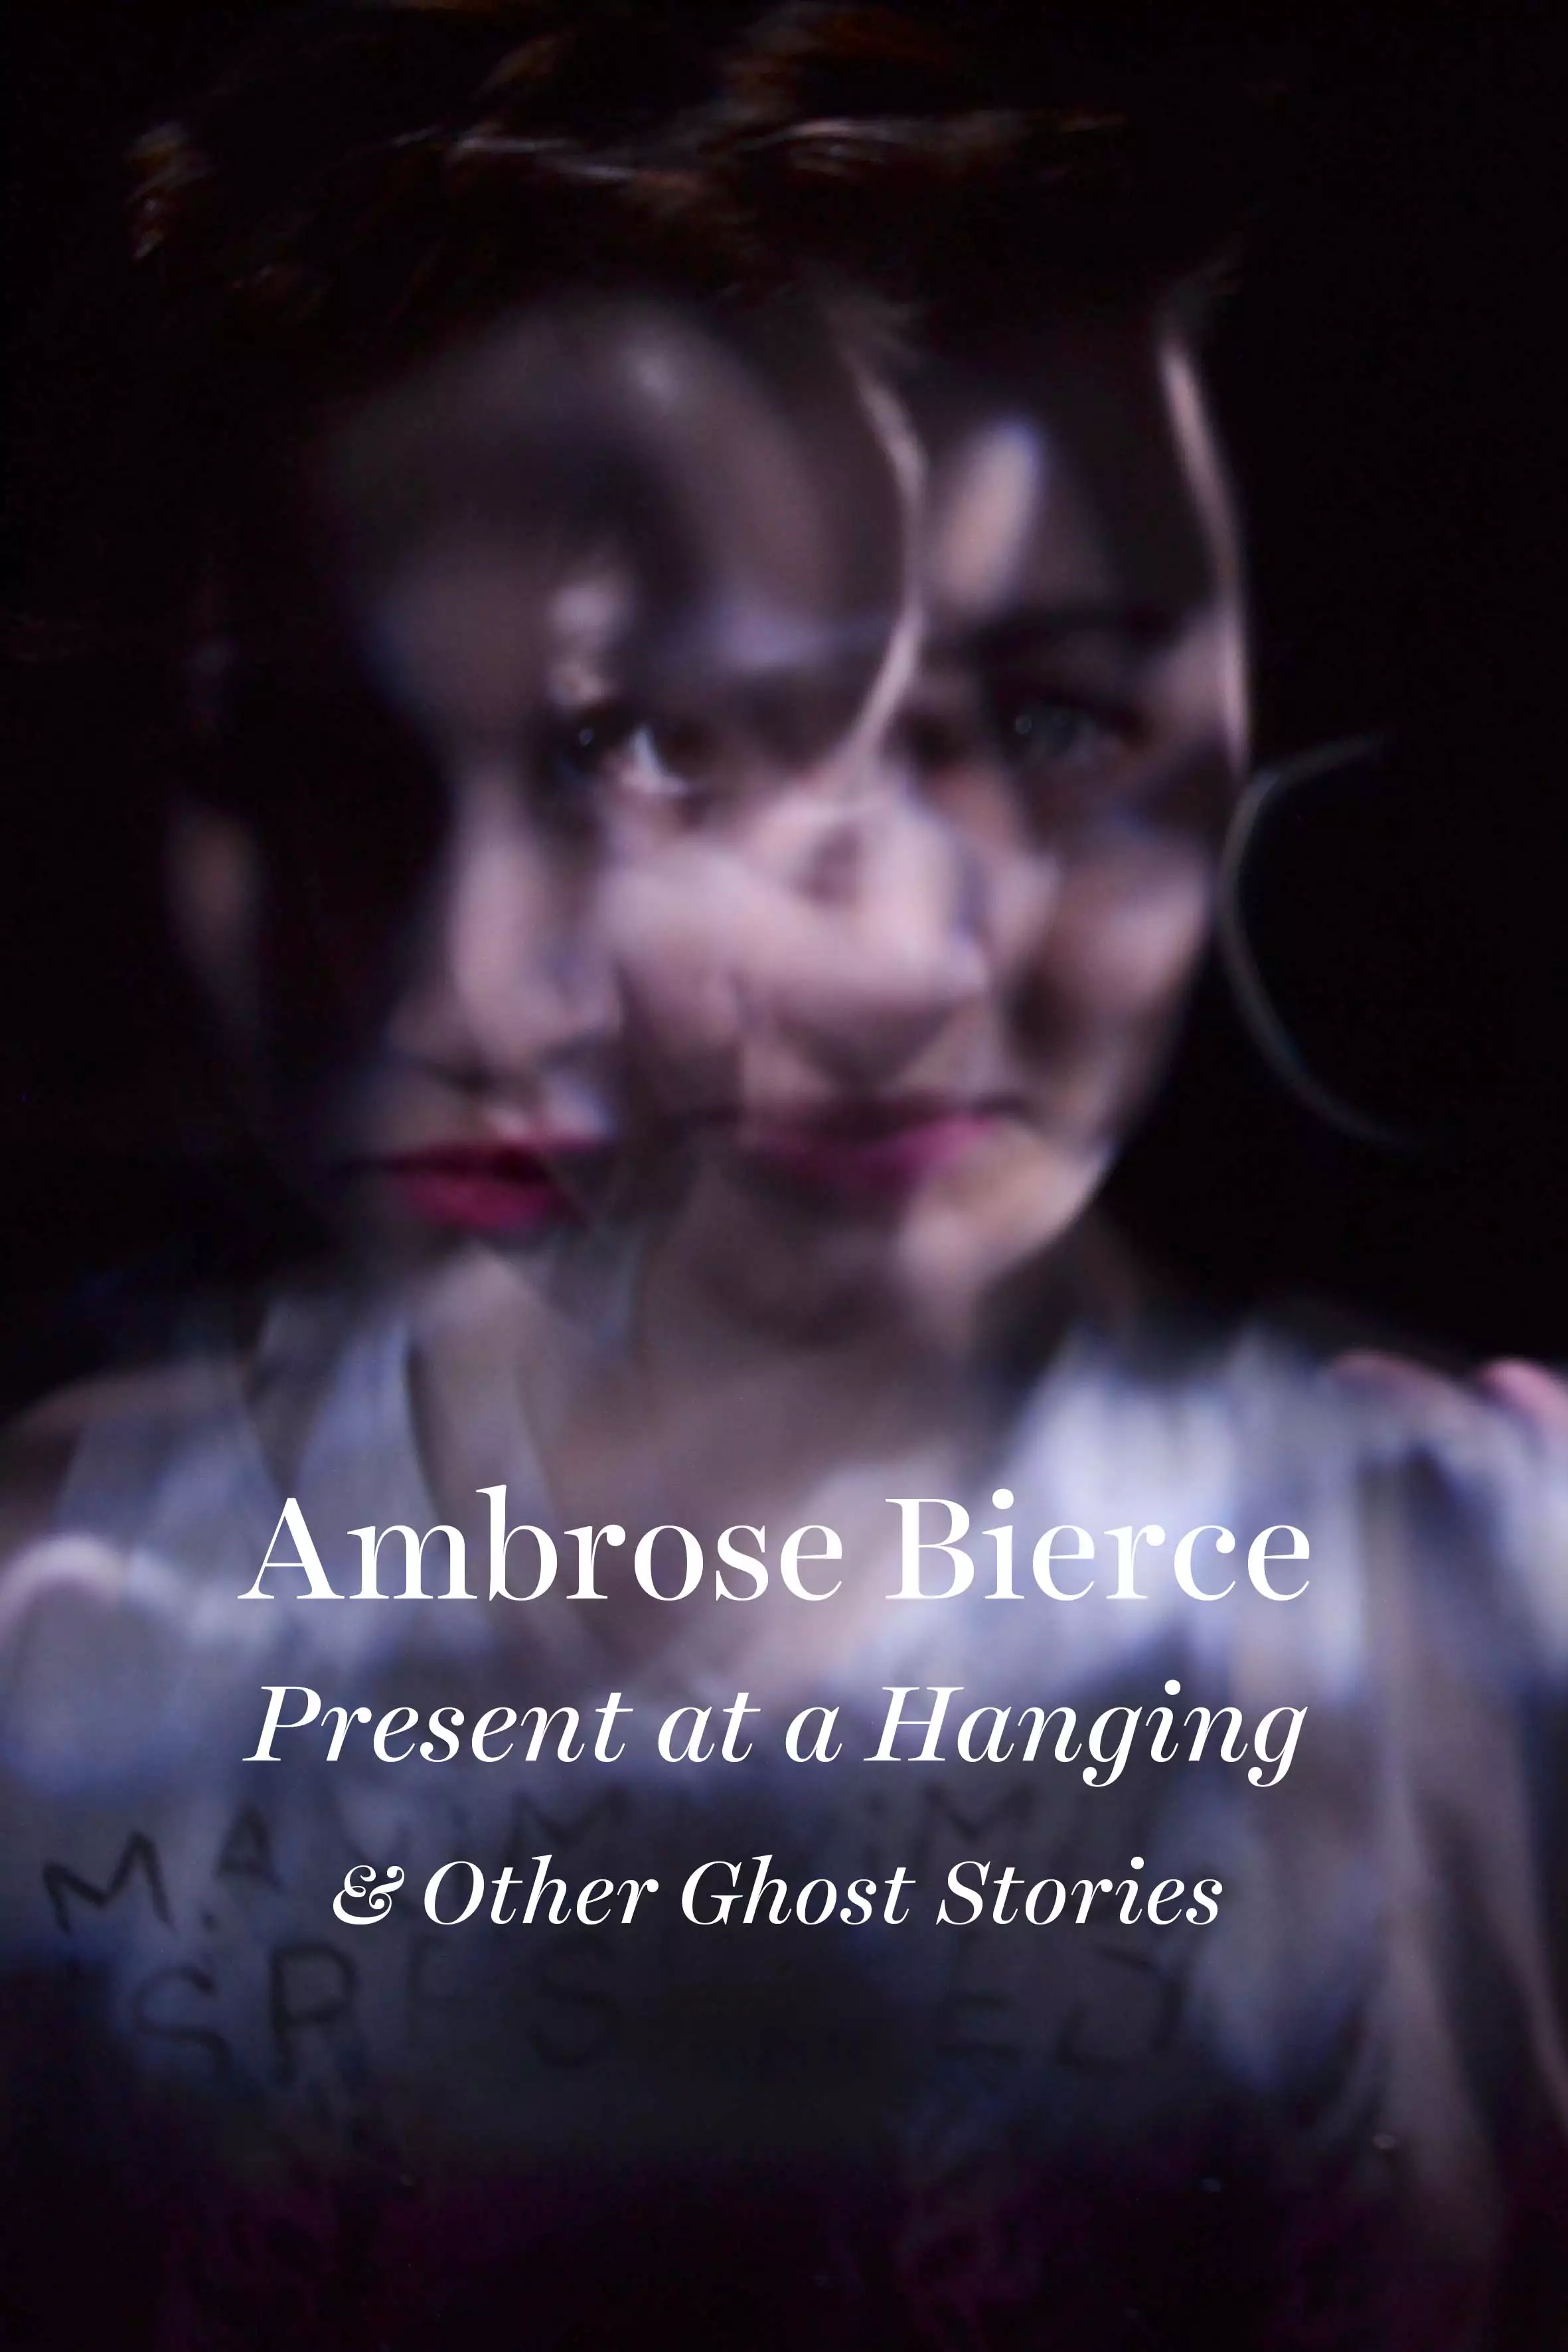 Ghost stories online free movie